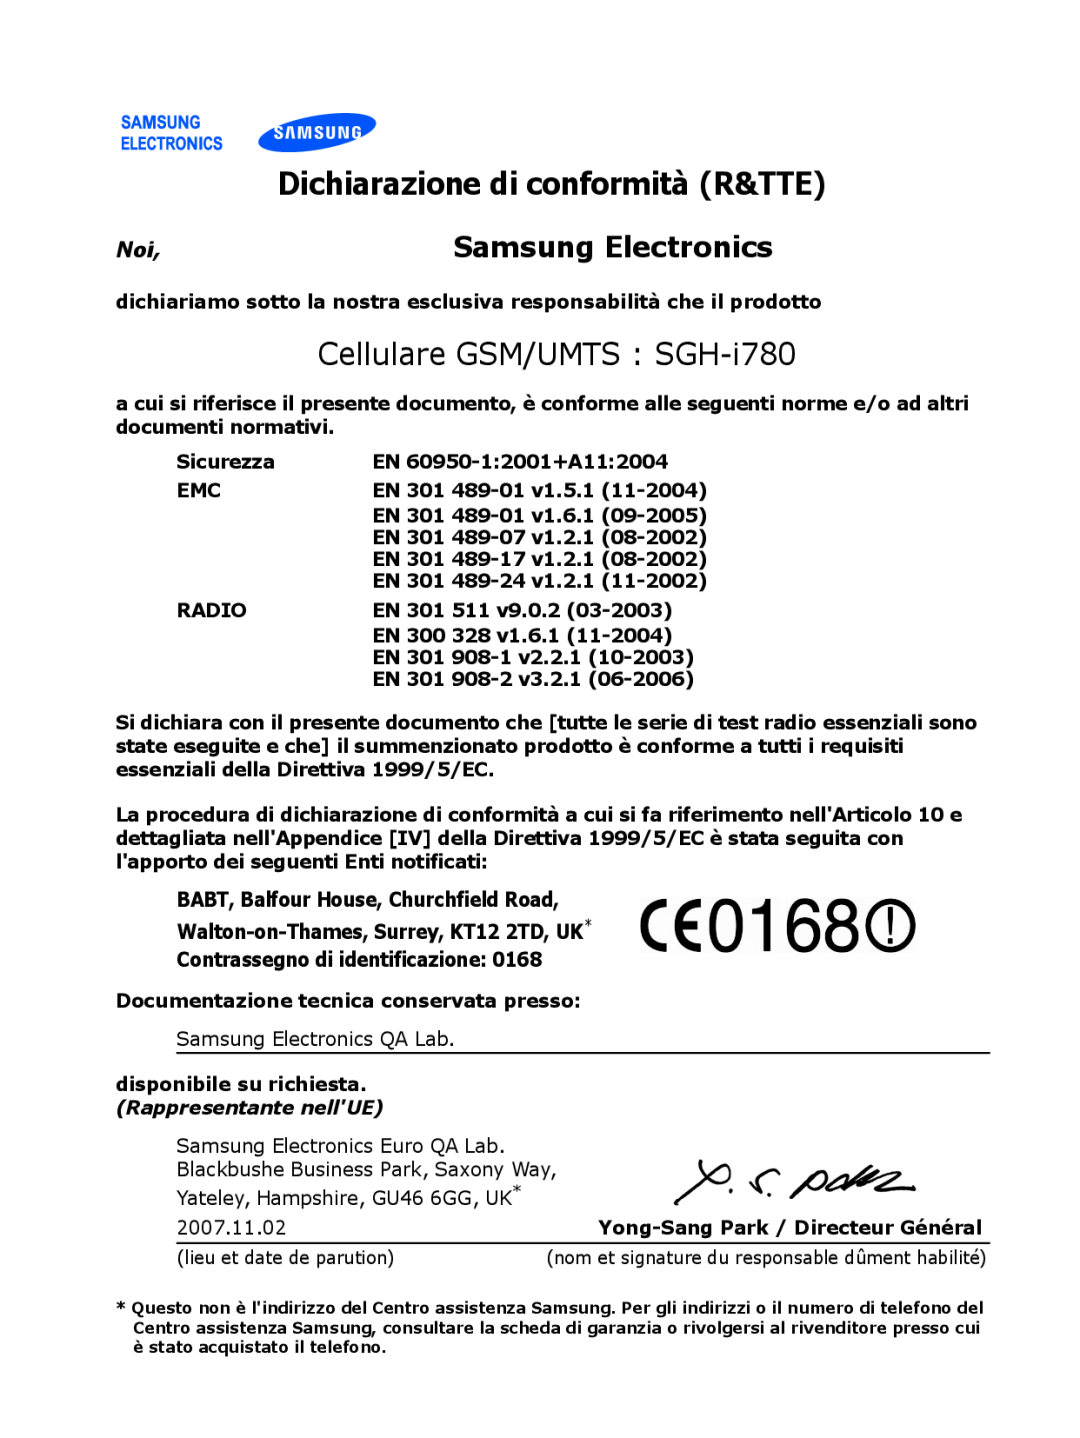 Samsung SGH-I780ZKNTIM, SGH-I780ZKNITV Cellulare GSM/UMTS SGH-i780, Dichiarazione di conformità R&TTE, Samsung Electronics 